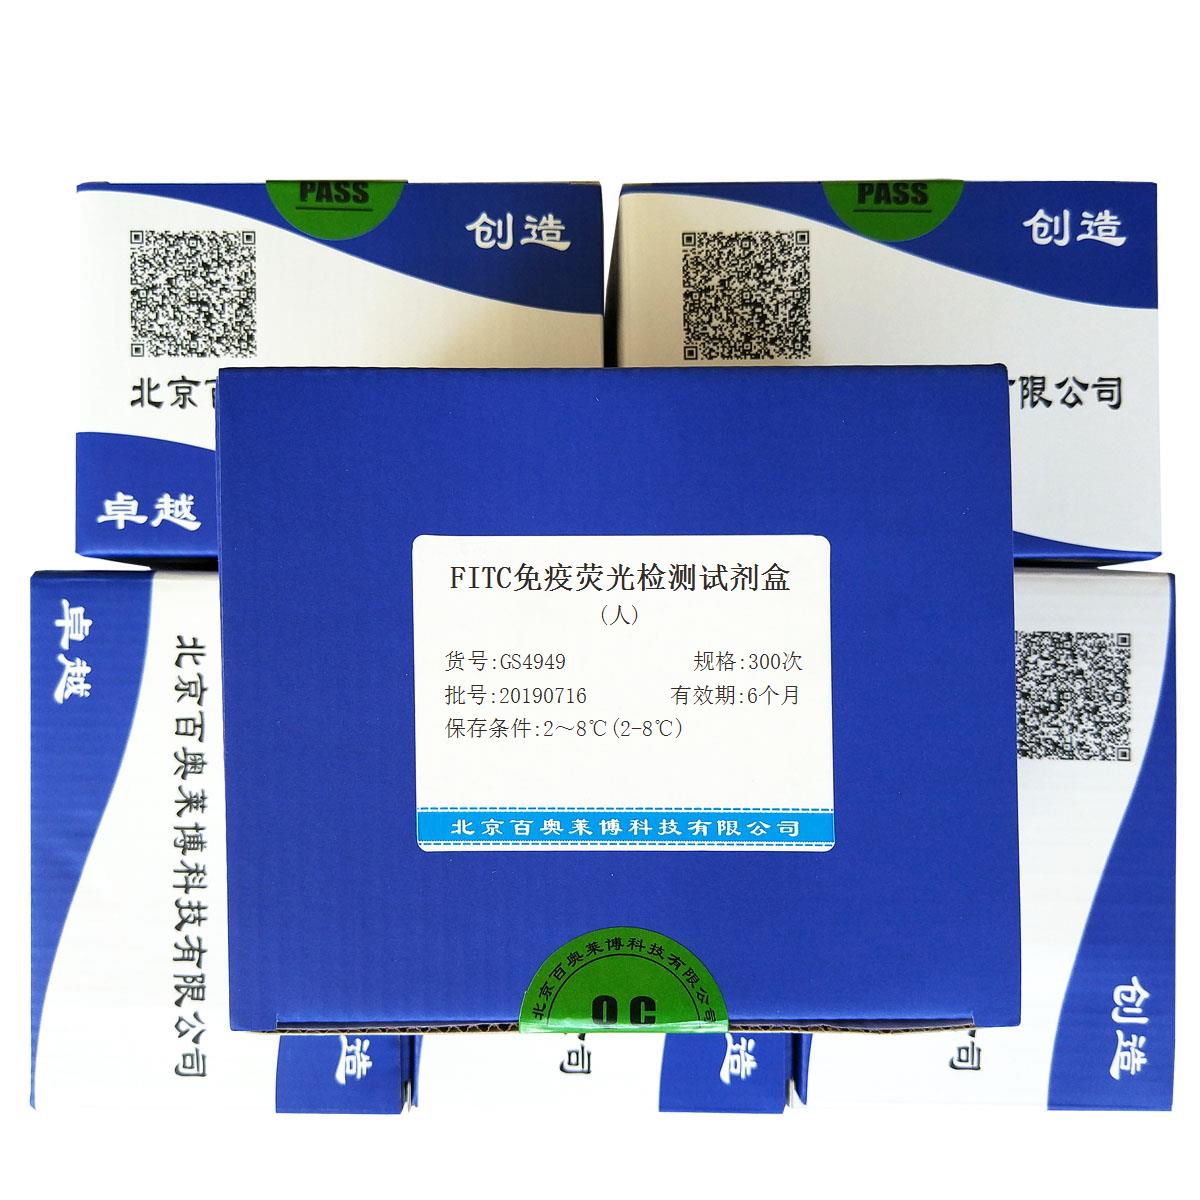 FITC免疫荧光检测试剂盒(人)北京品牌